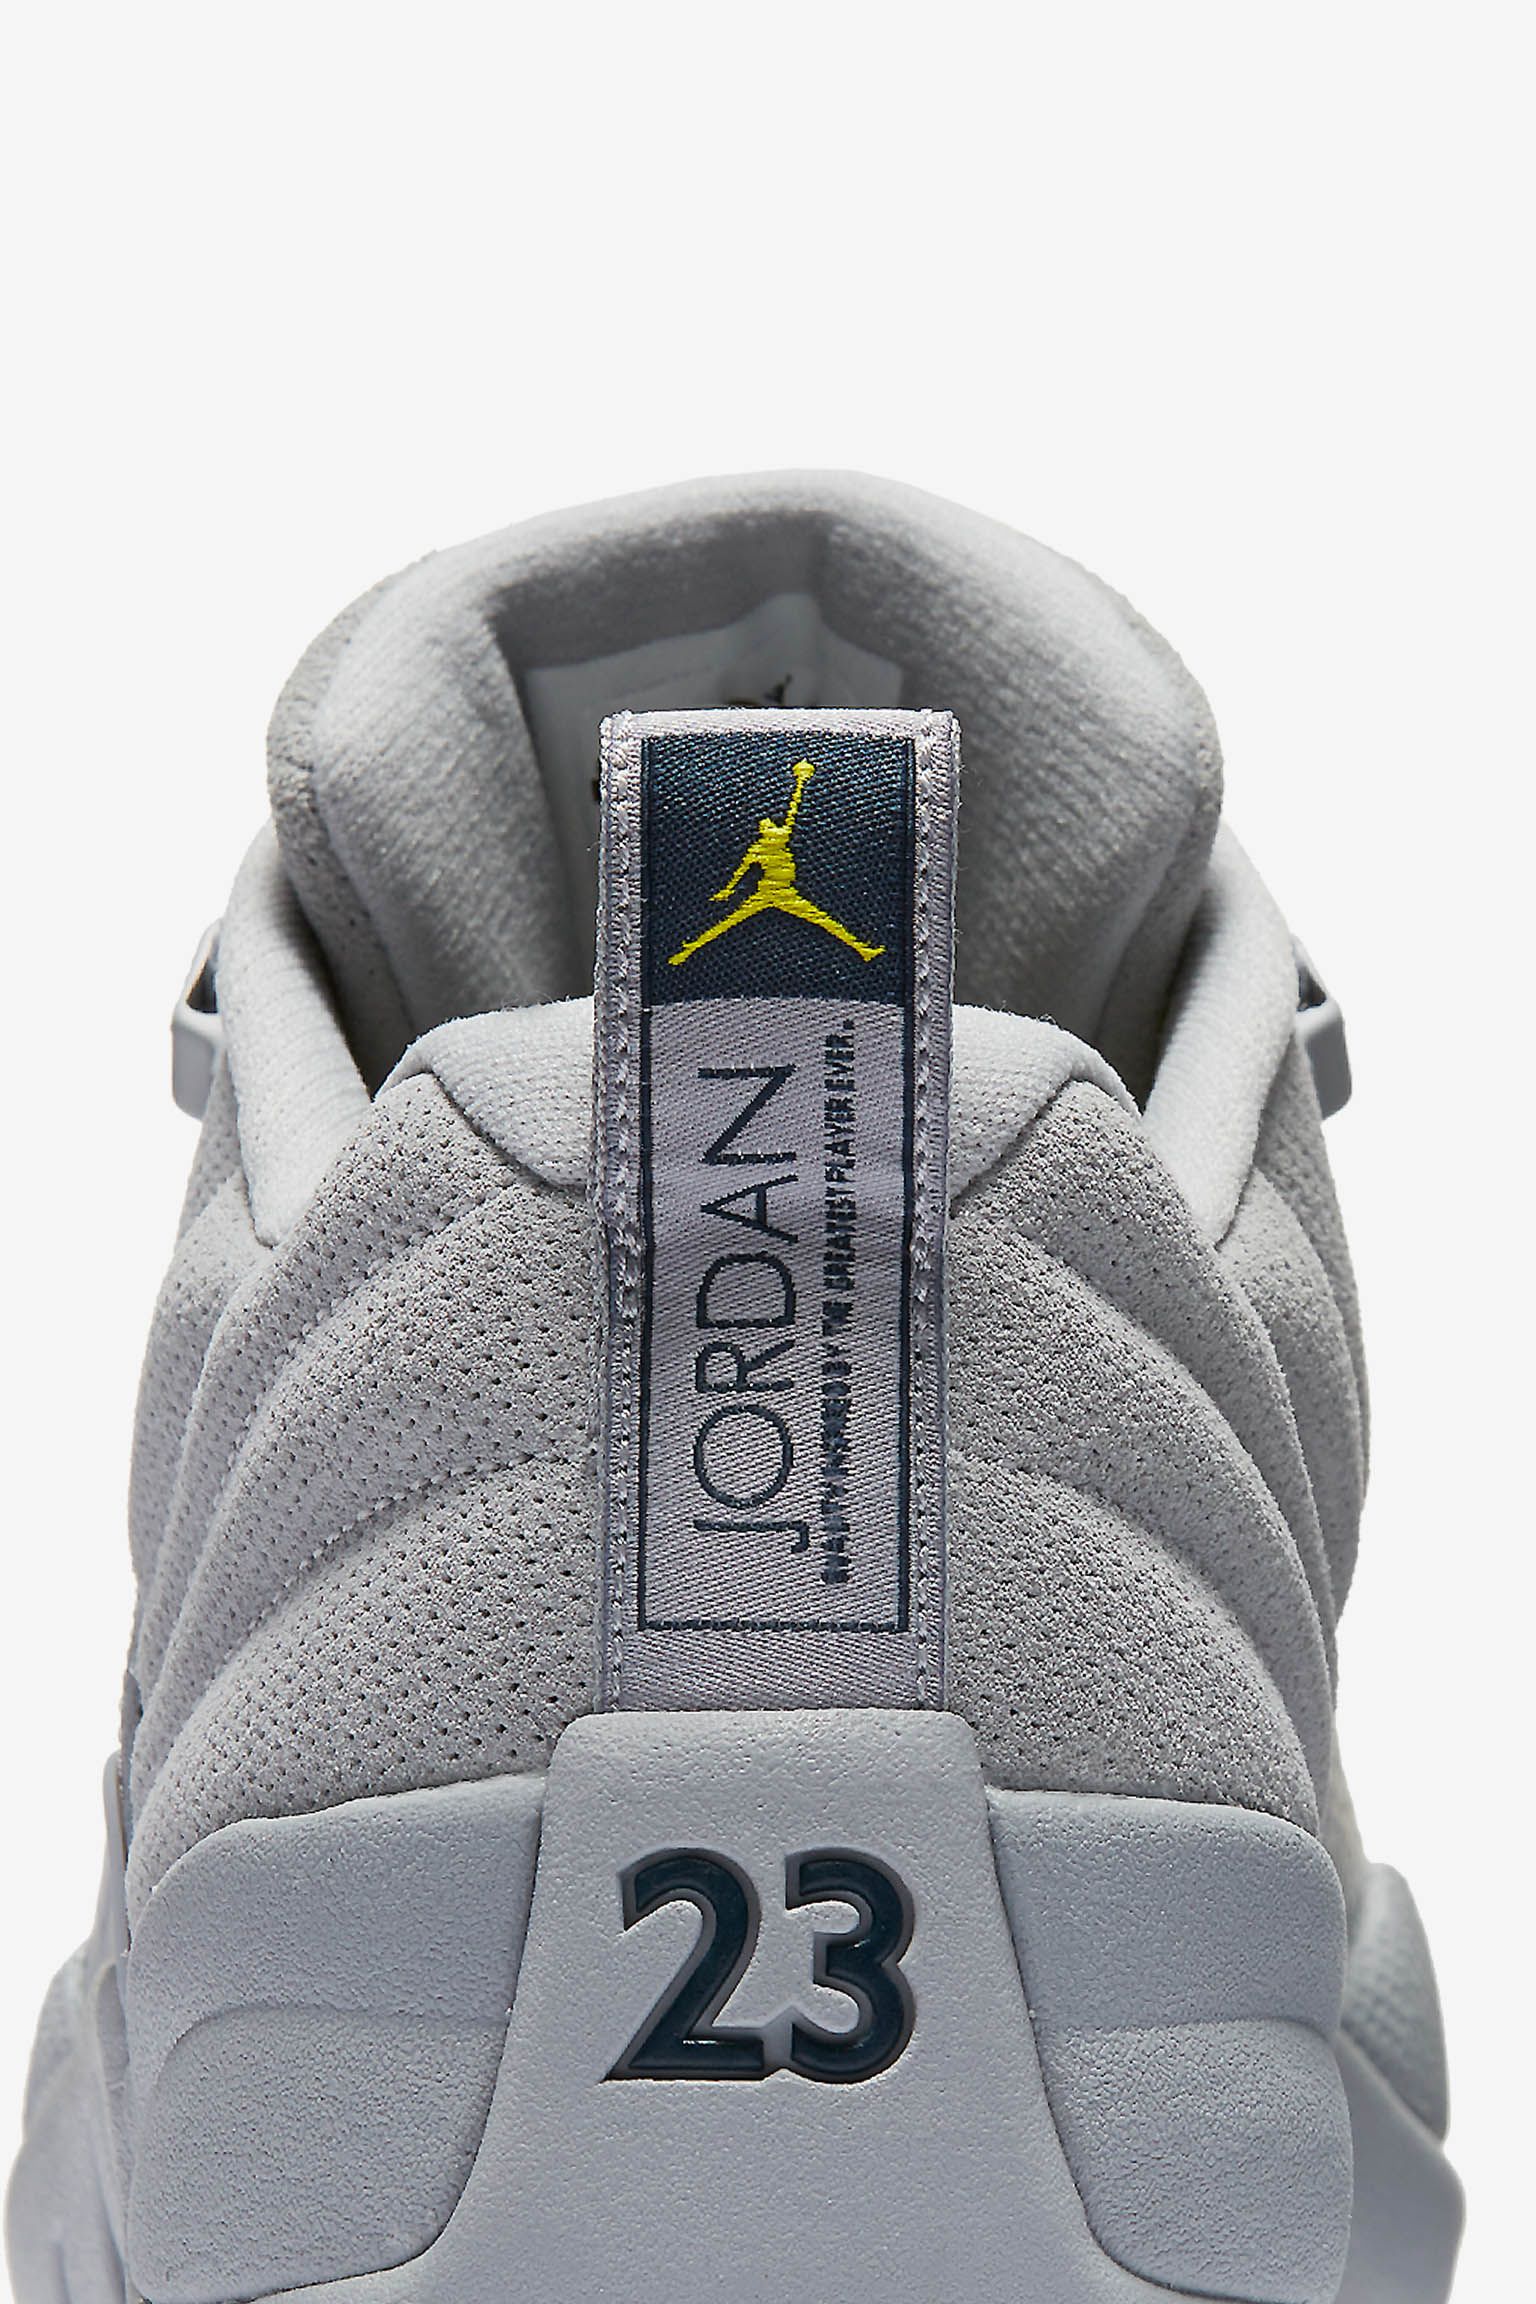 Air Jordan 12 Retro Low 'Wolf Grey'. Nike SNKRS